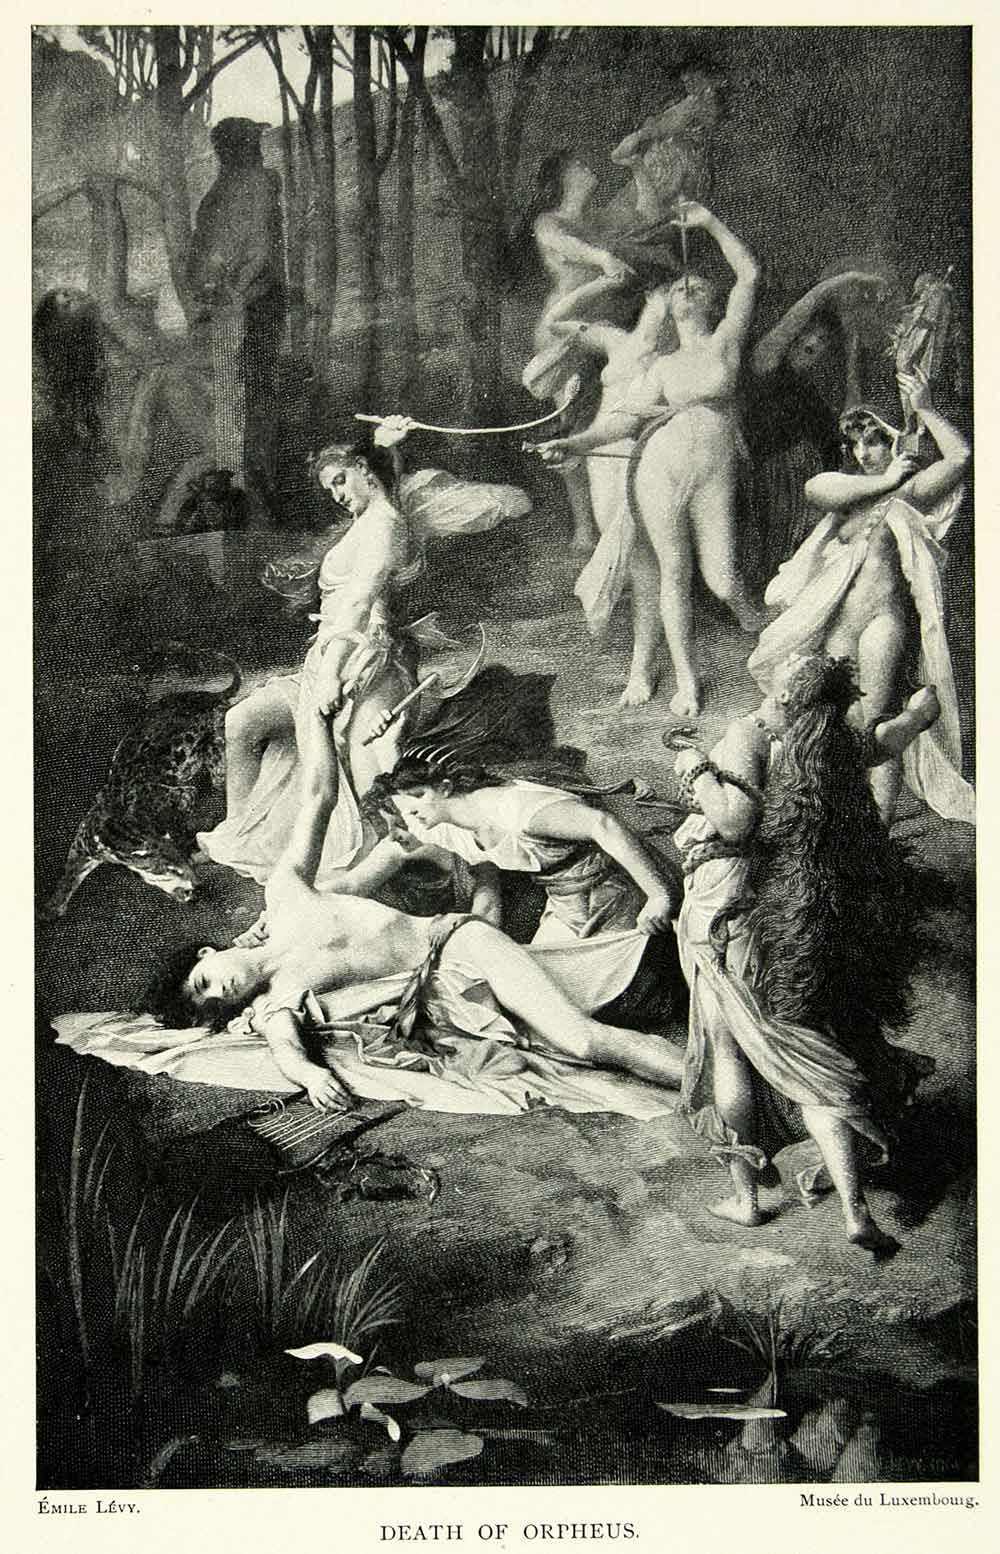 1895 Print Emile Levy Art Death of Orpheus Musician Ancient Greek Mythology God